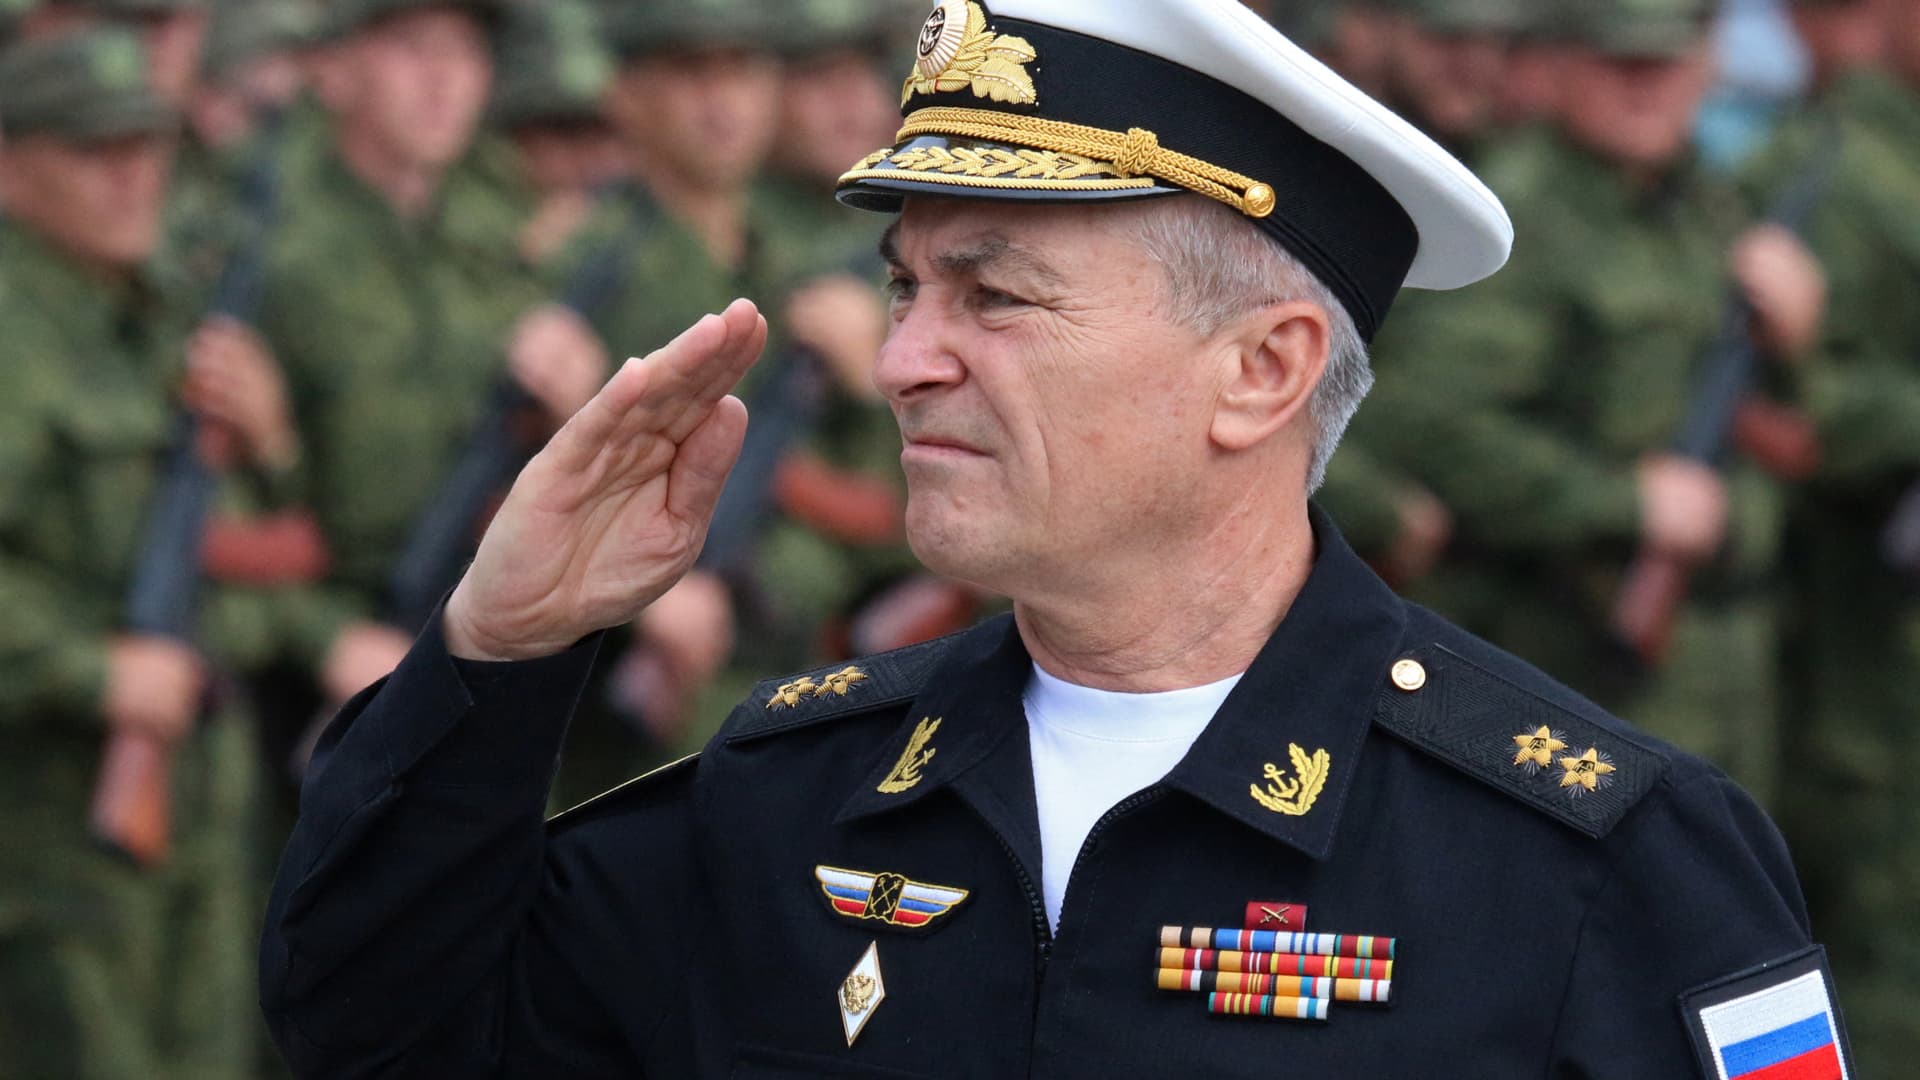 Dead or alive? Mystery surrounds the fate of Russia’s Black Sea Fleet commander